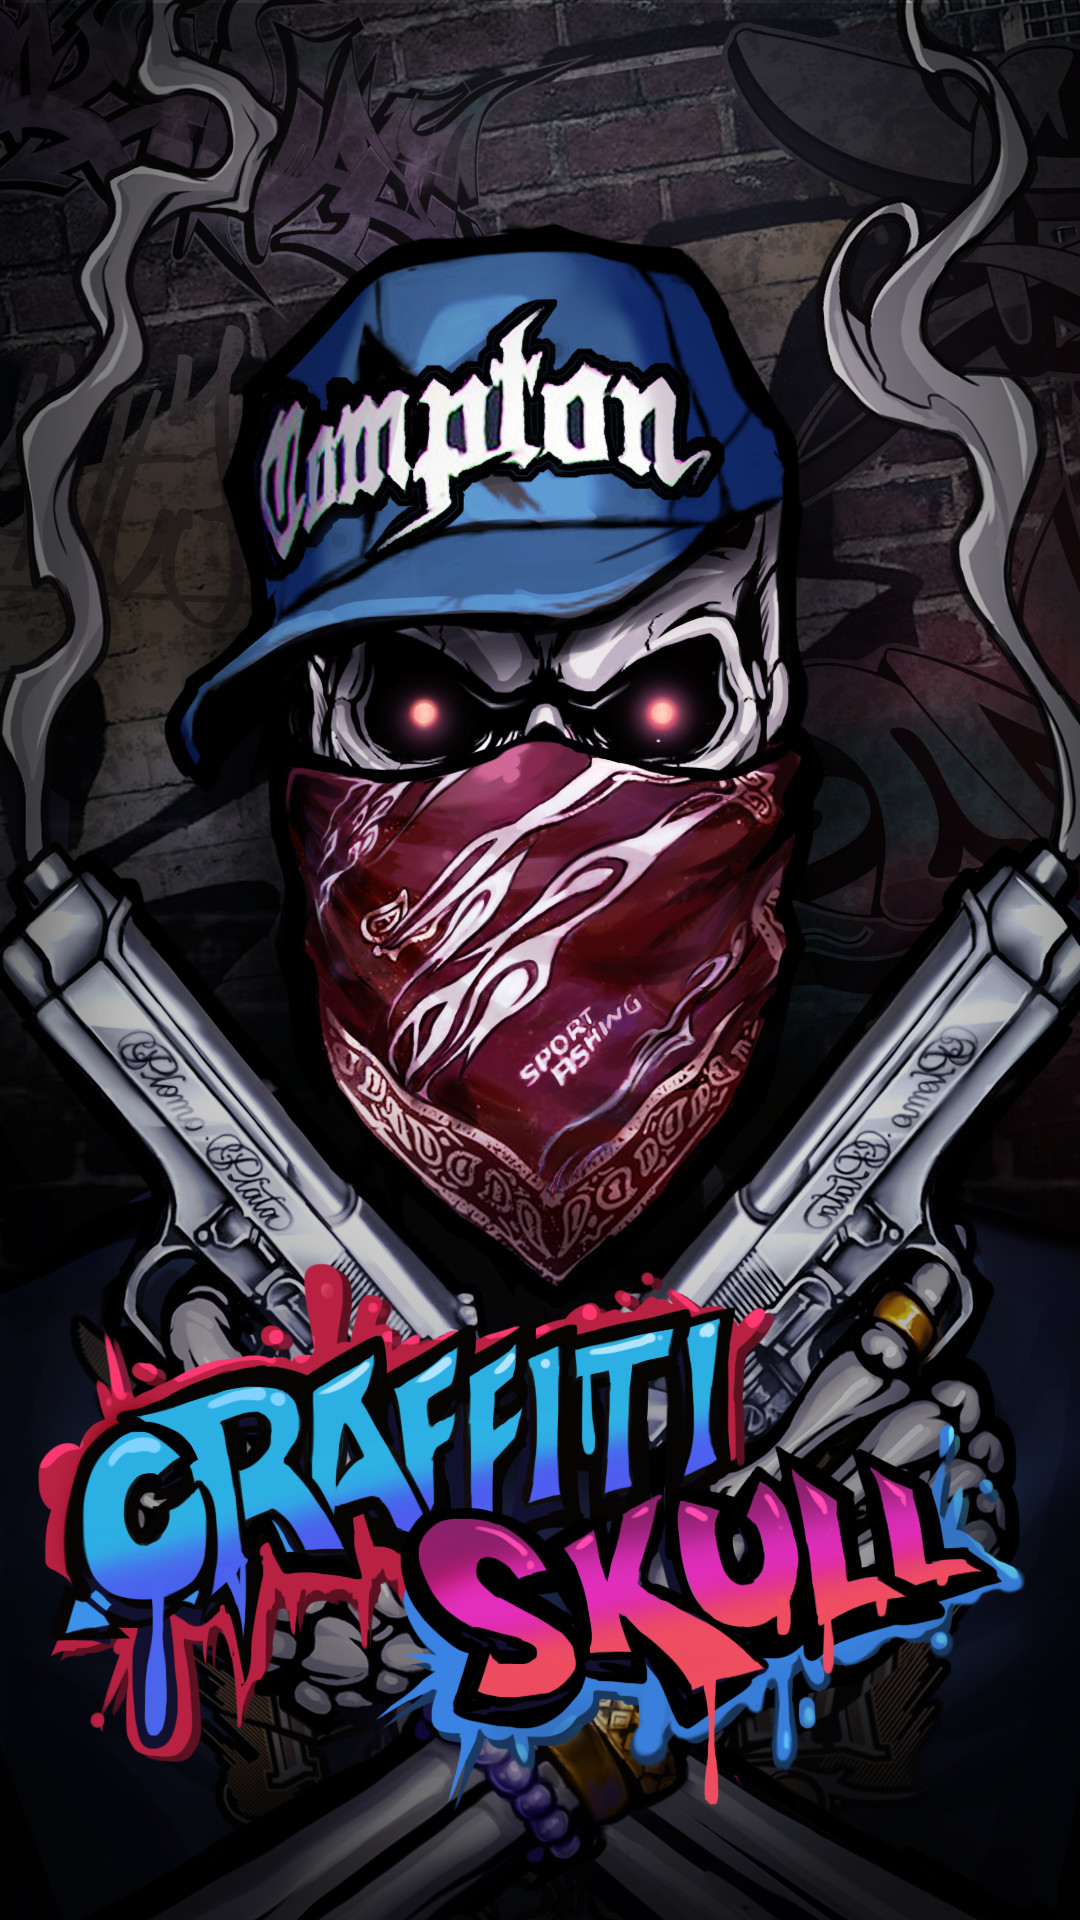 Cool Graffiti Skull Wallpaper Hip Hop Style Data-src - 1080p Best Graffiti Wallpapers  Hd - 1080x1920 Wallpaper 